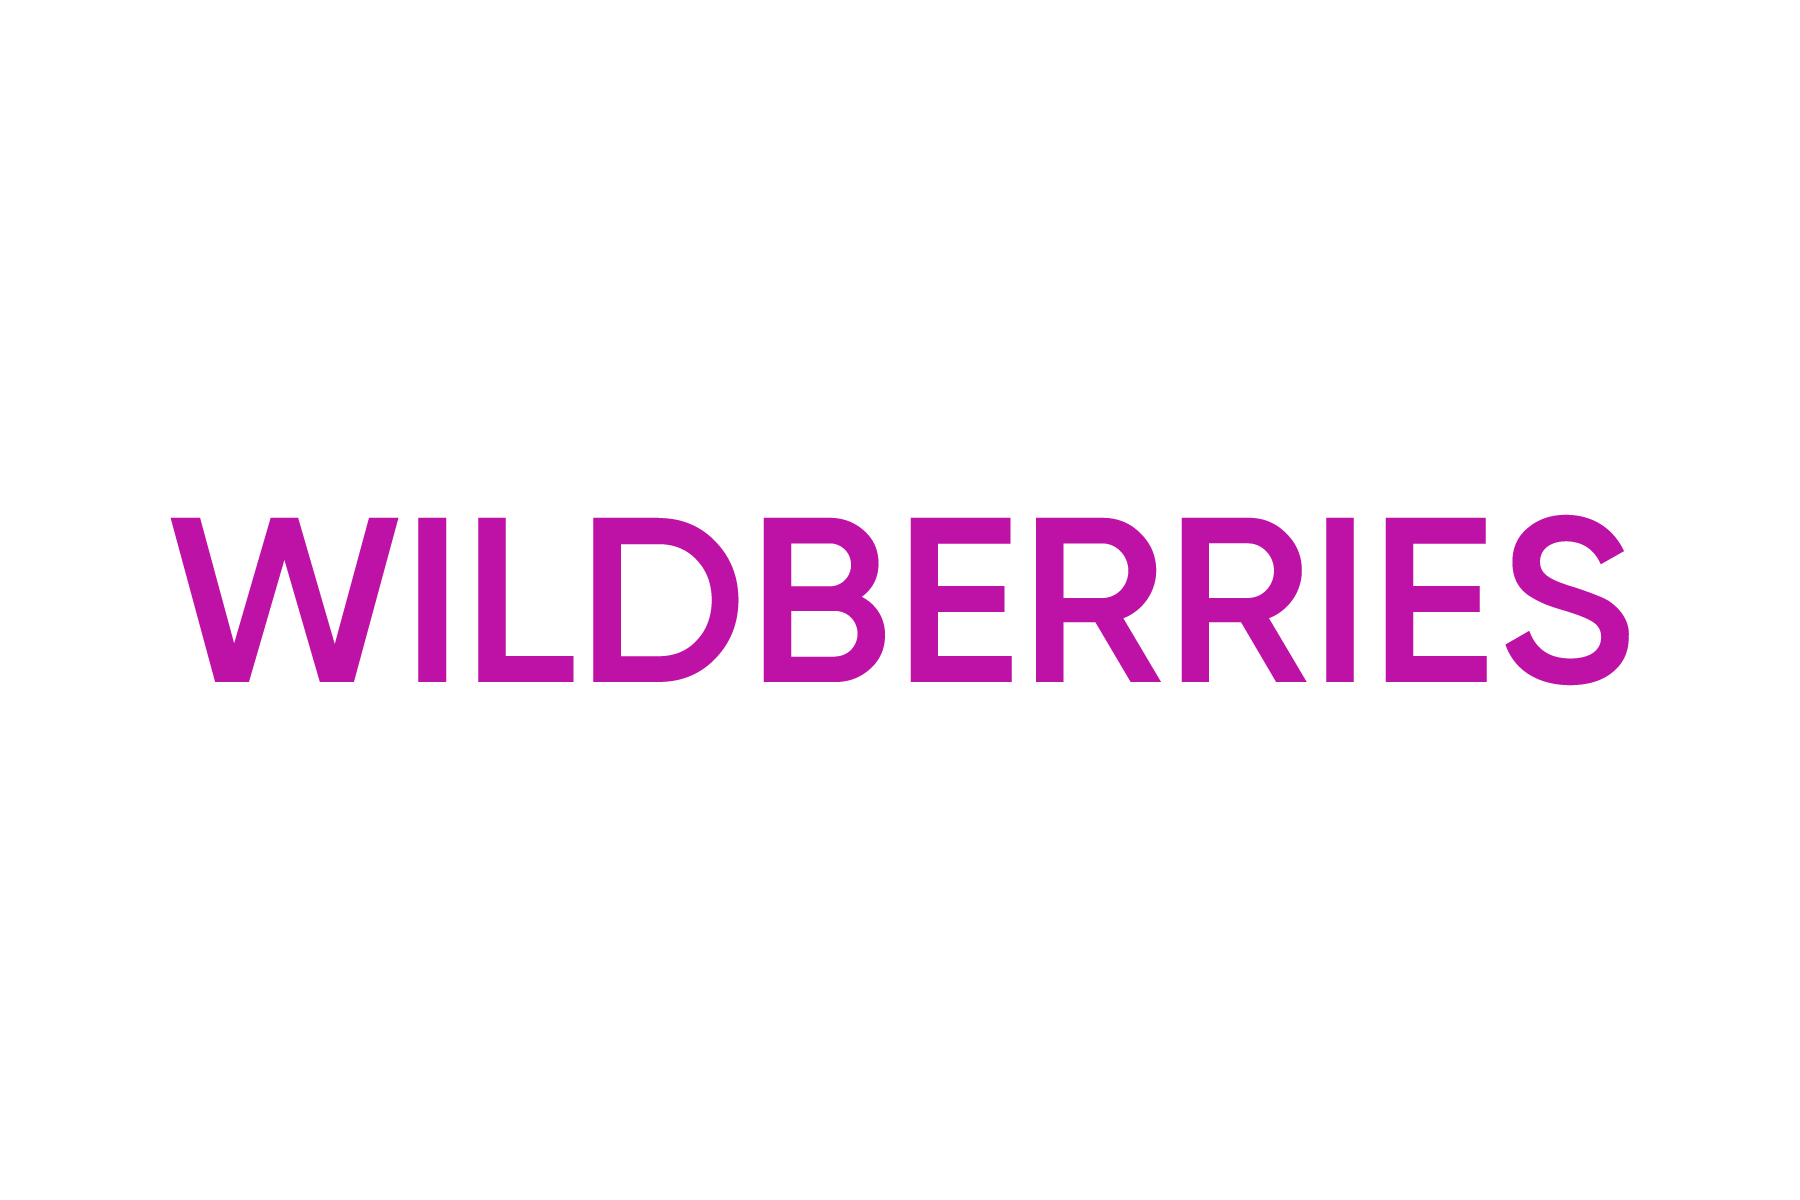 Вб главная. Wildberries. Wildberries лого. Надпись Wildberries. Логотип Wildberries на прозрачном фоне.